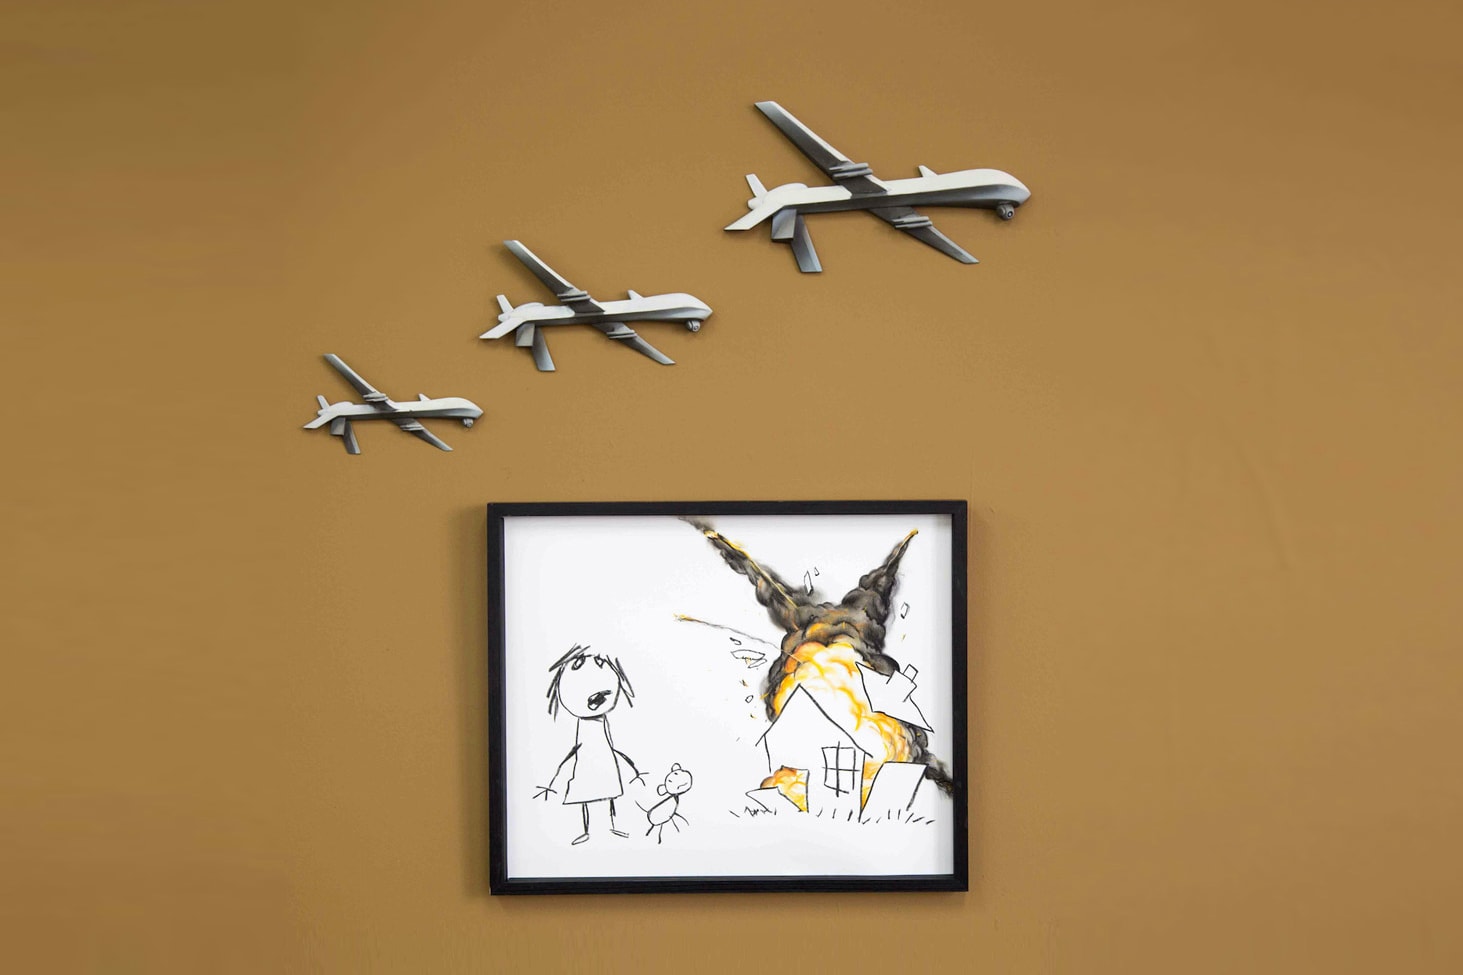 Banksy Anti Weapons Artwork Art The Arms Fair Contribution Work Civilian Drone Strike